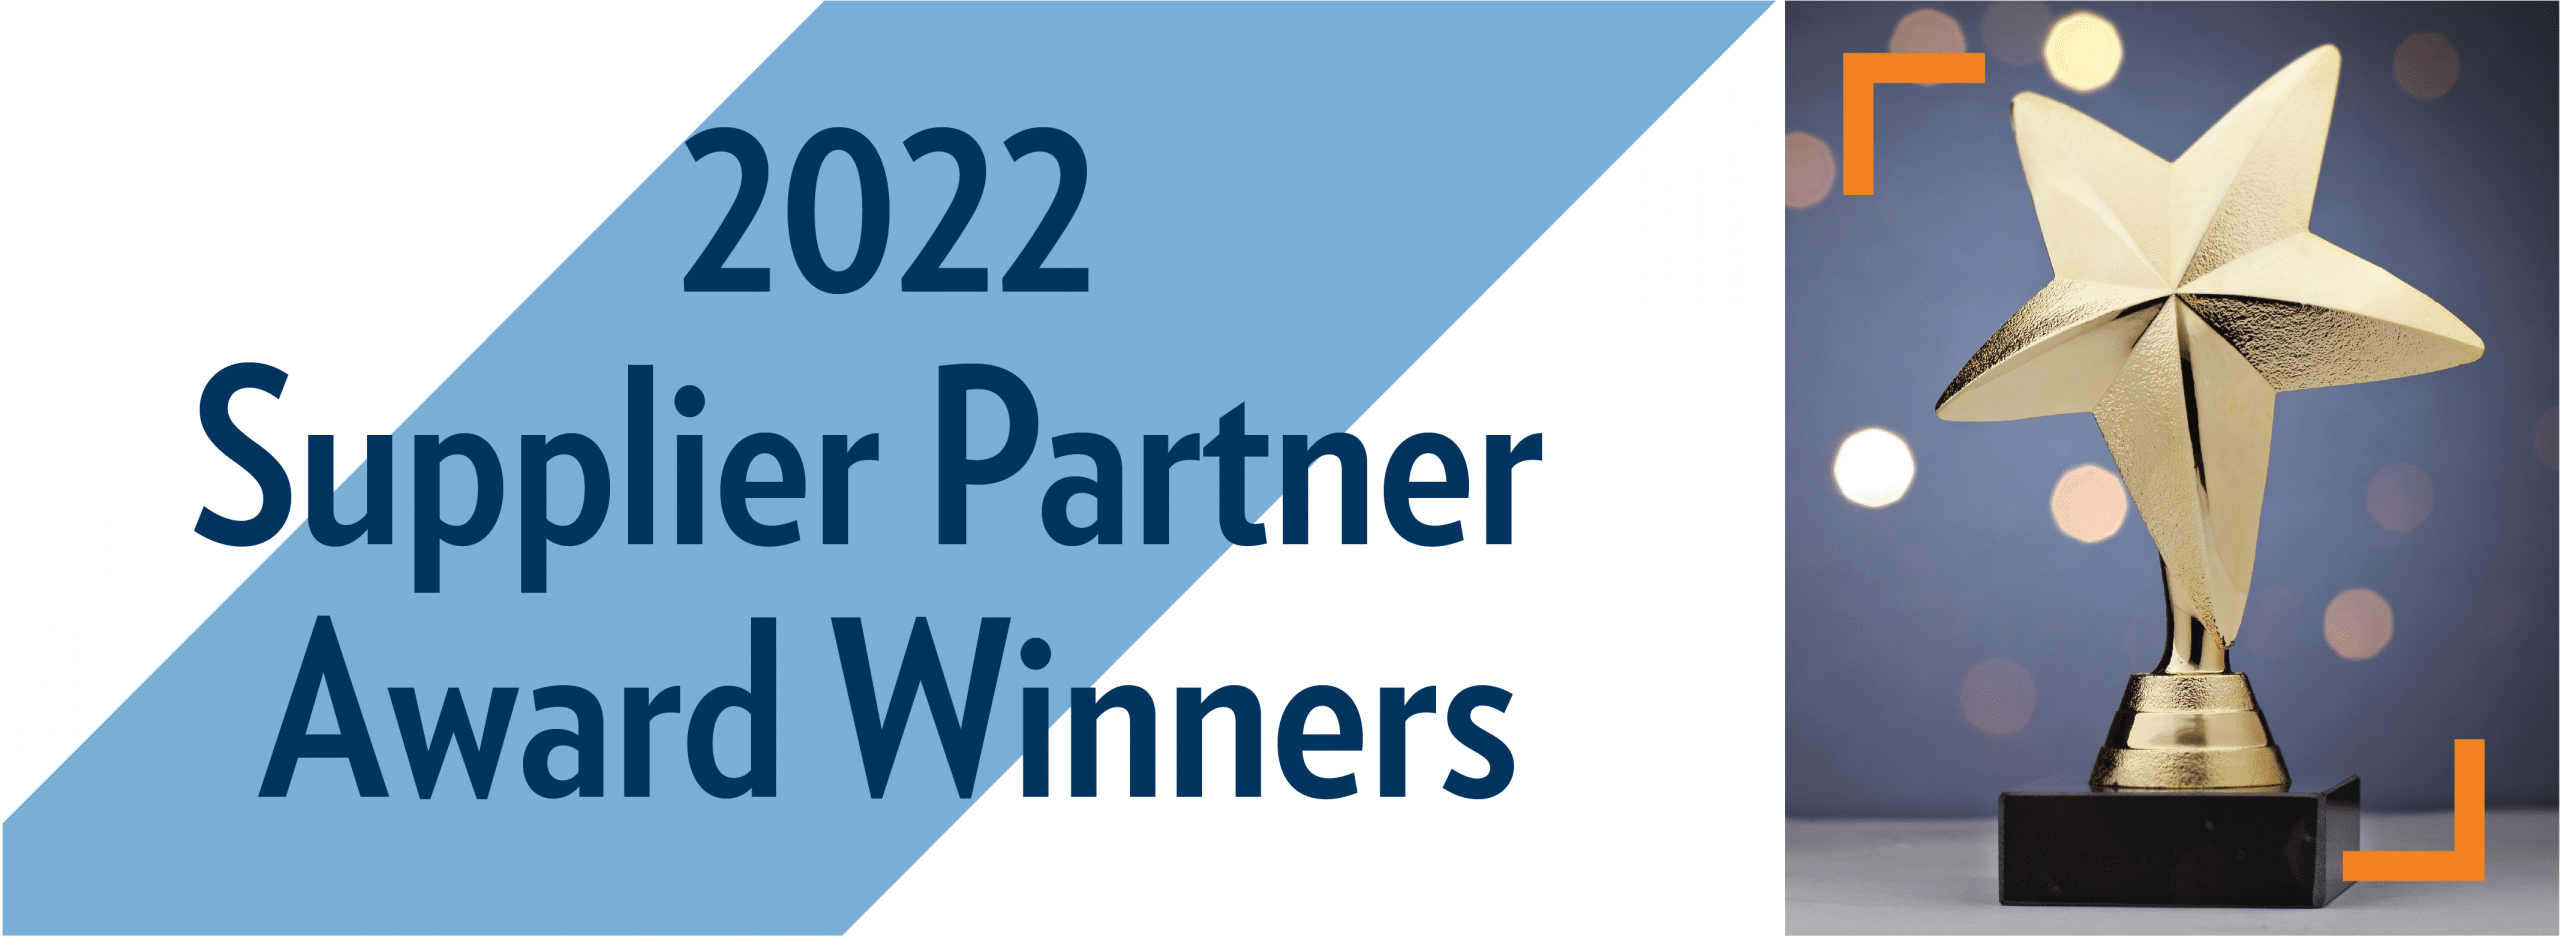 MexLucky Supplier Partner Awards 2022 Winners